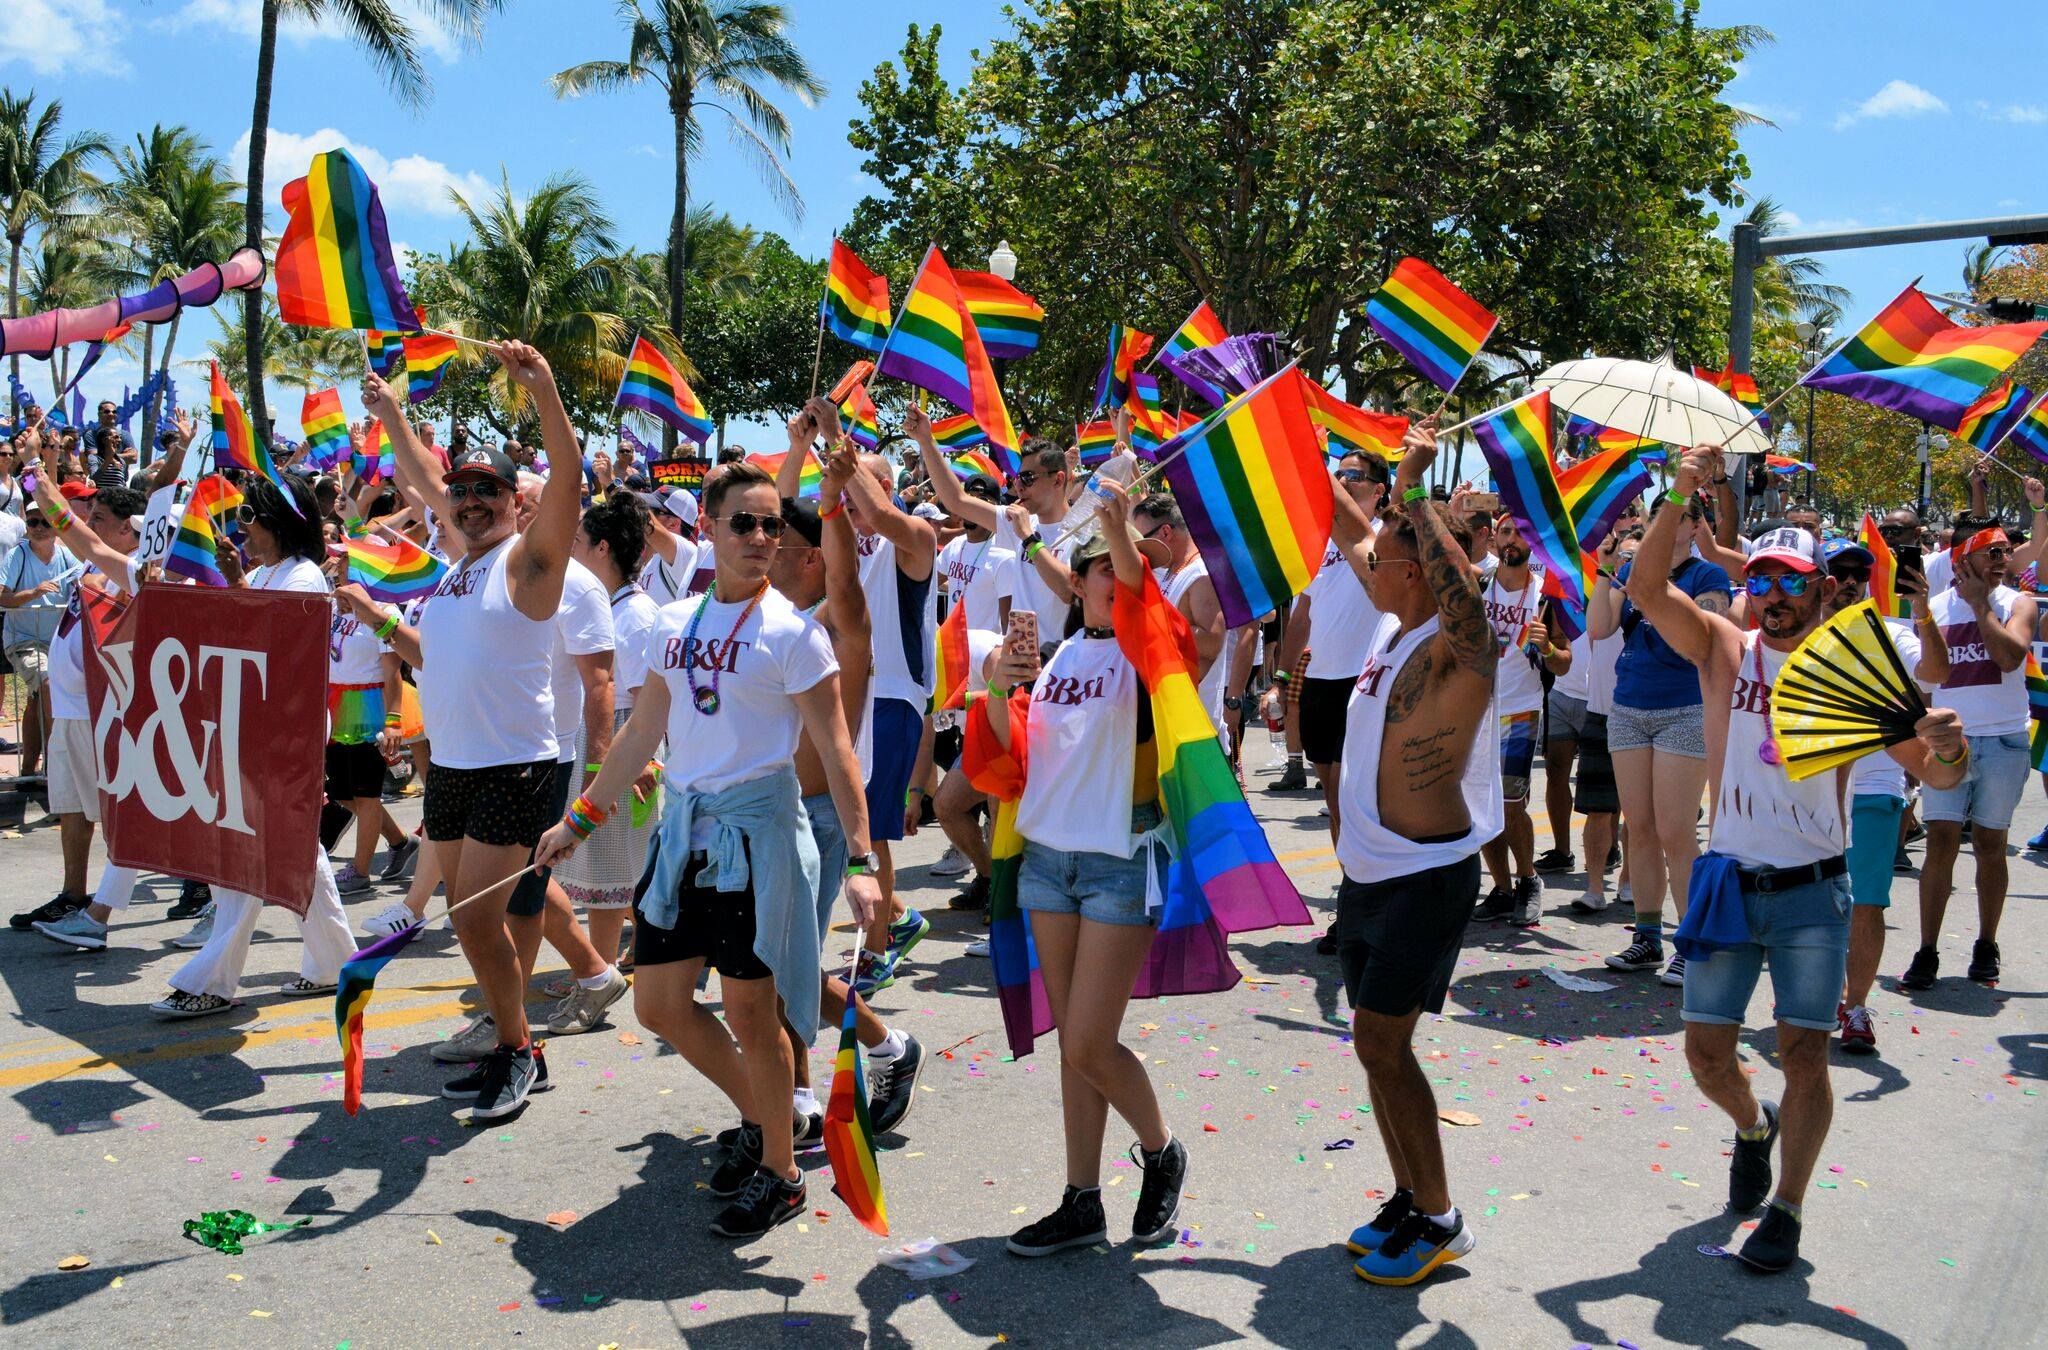 Gus Kenworthy & Taylor Dayne to headline Miami Beach Pride / GayCities Blog